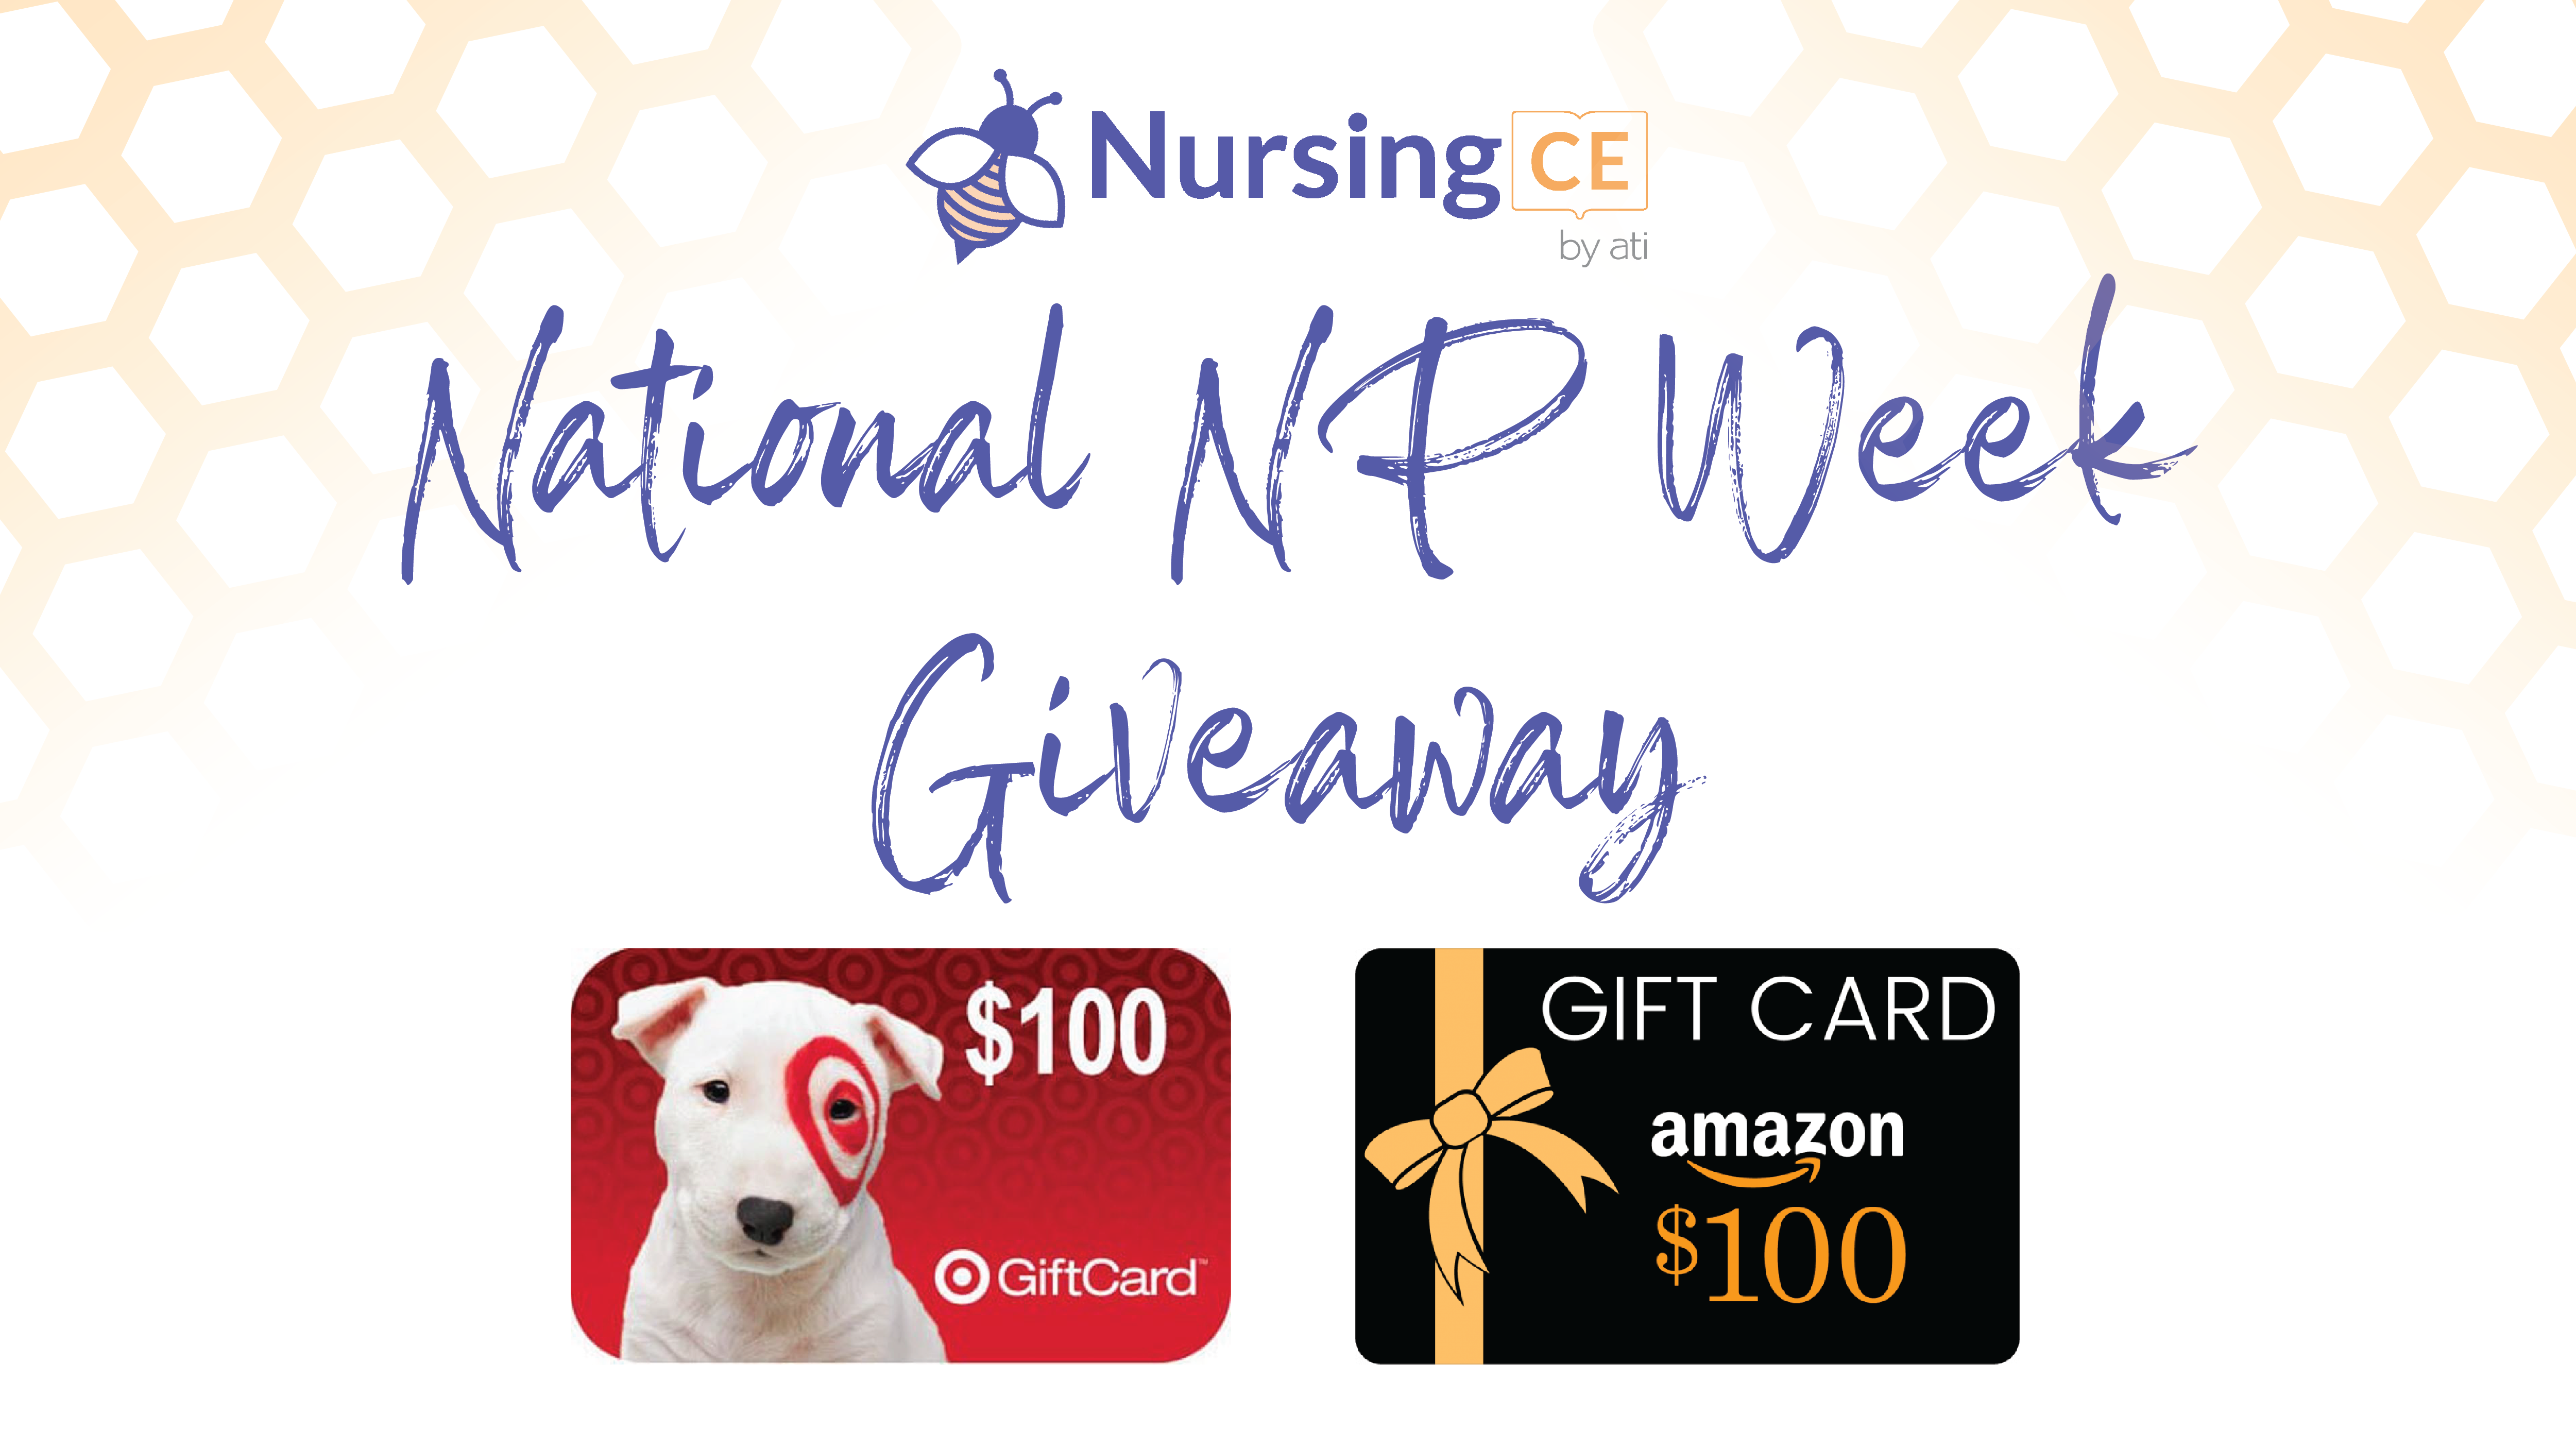 Celebrate National Nurse Practitioner Week - Enter our Gift Card Giveaway